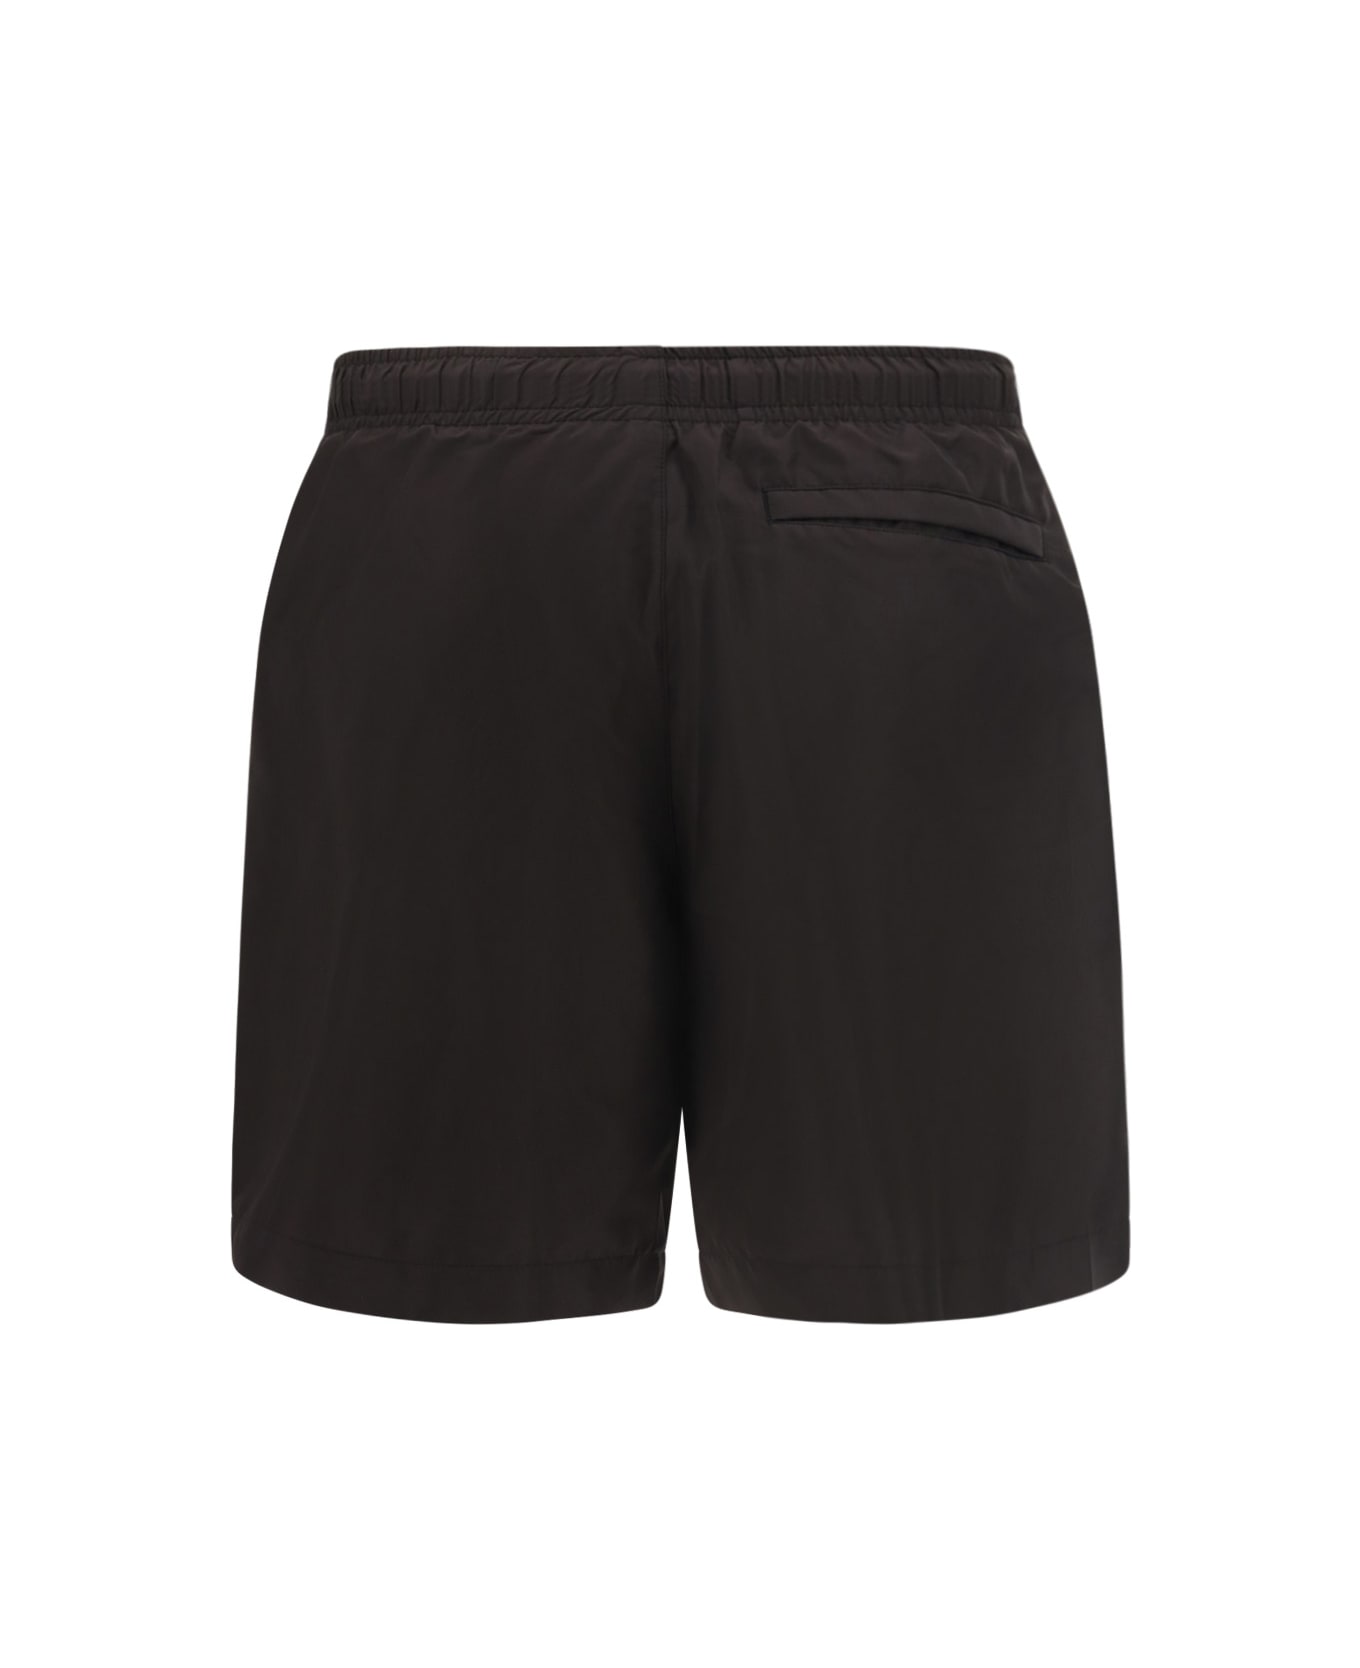 Givenchy Black Polyester Swimming Shorts - Black/white